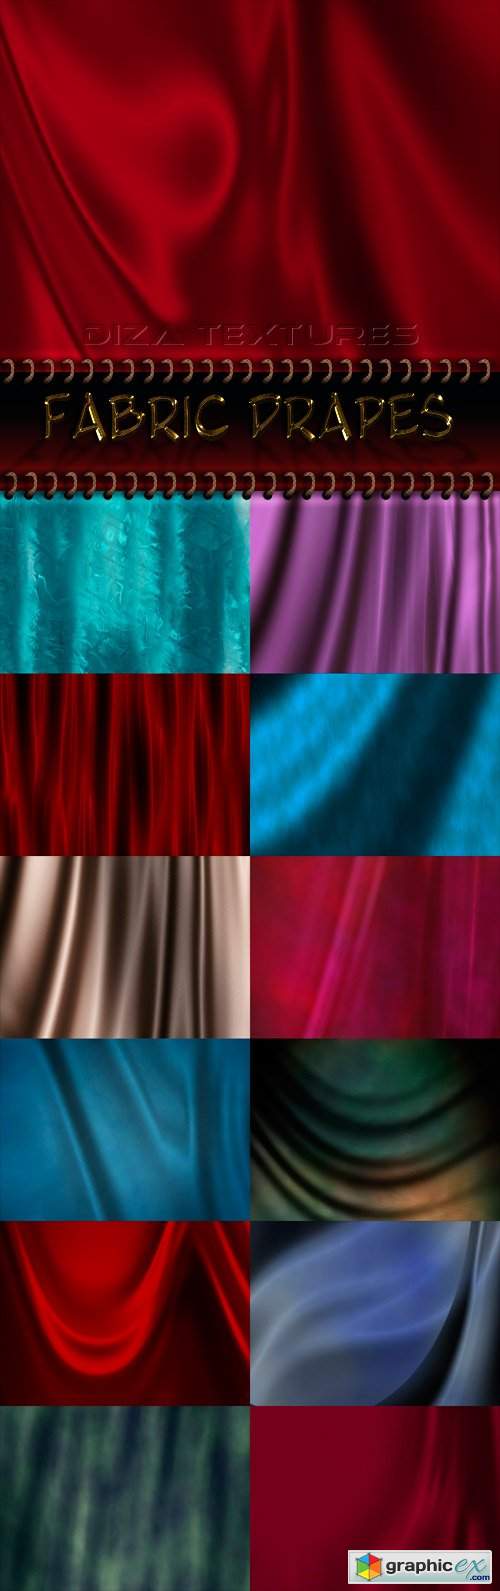  Fabric drapes textures 